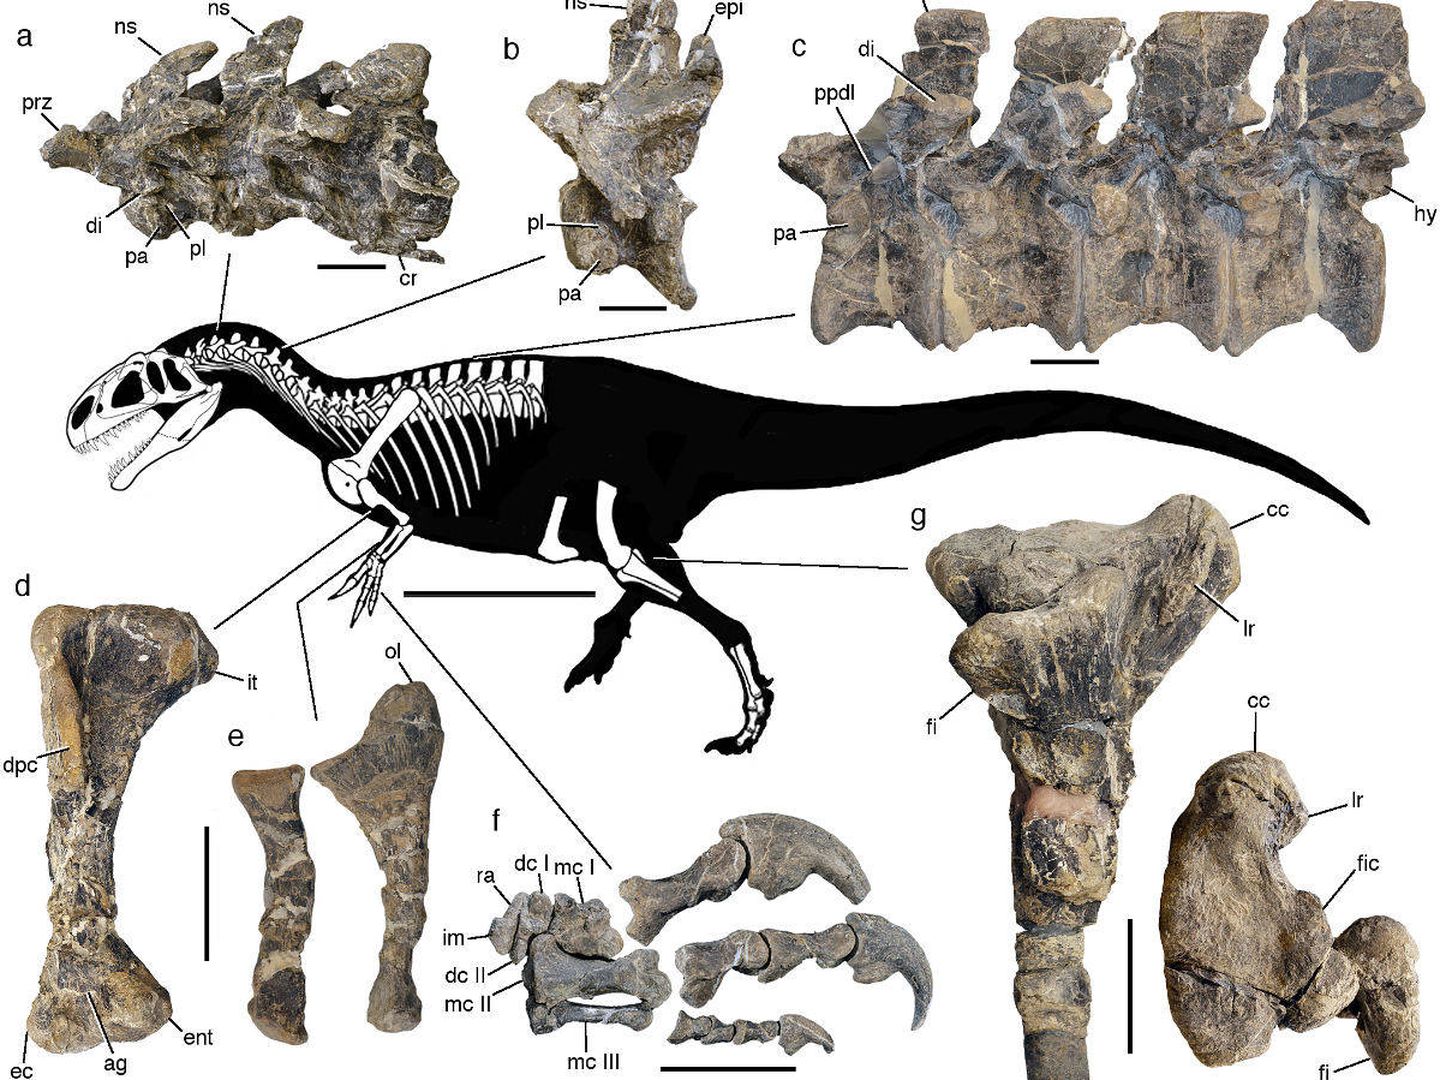 Esqueleto del dinosaurio. (Museo Paleontológico Egidio Feruglio/Scientific Reports)